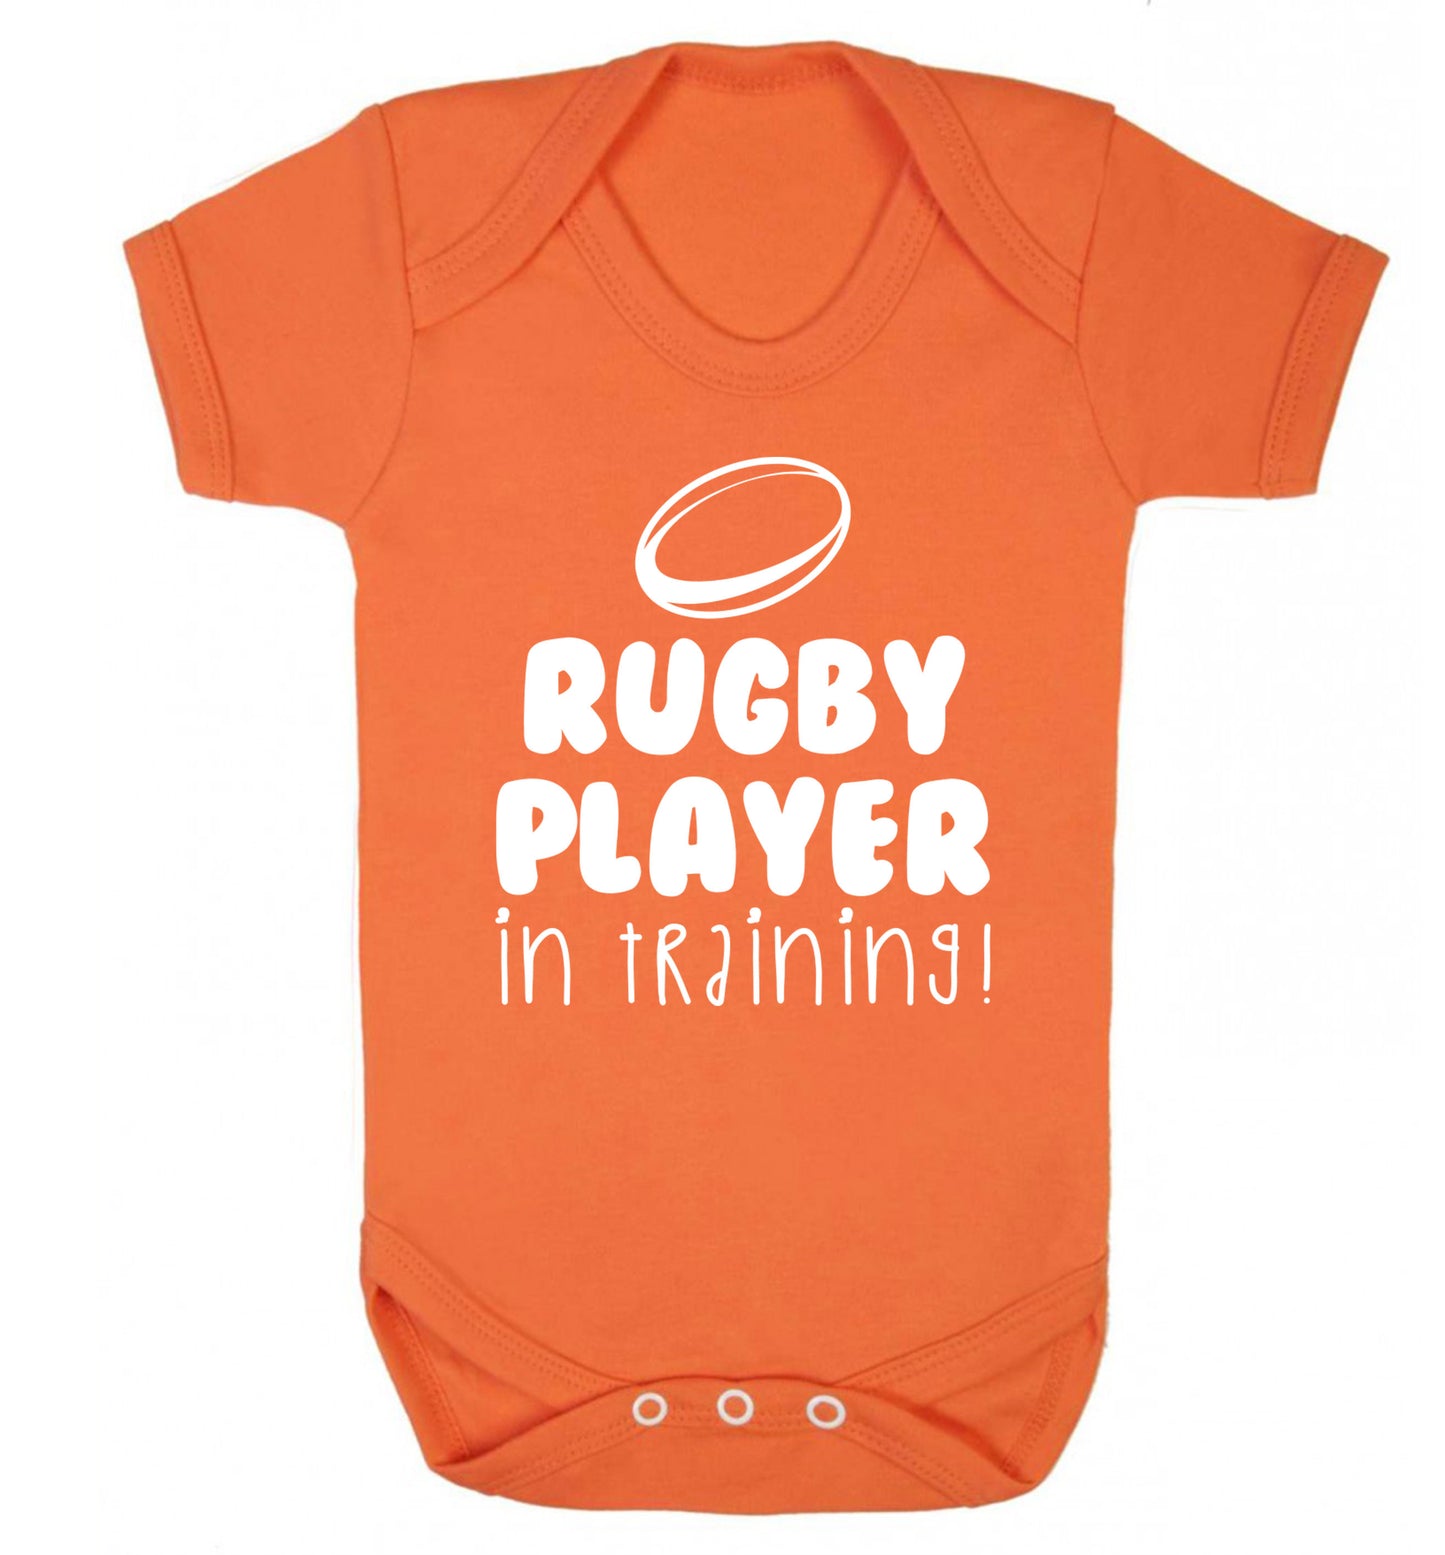 Rugby player in training Baby Vest orange 18-24 months